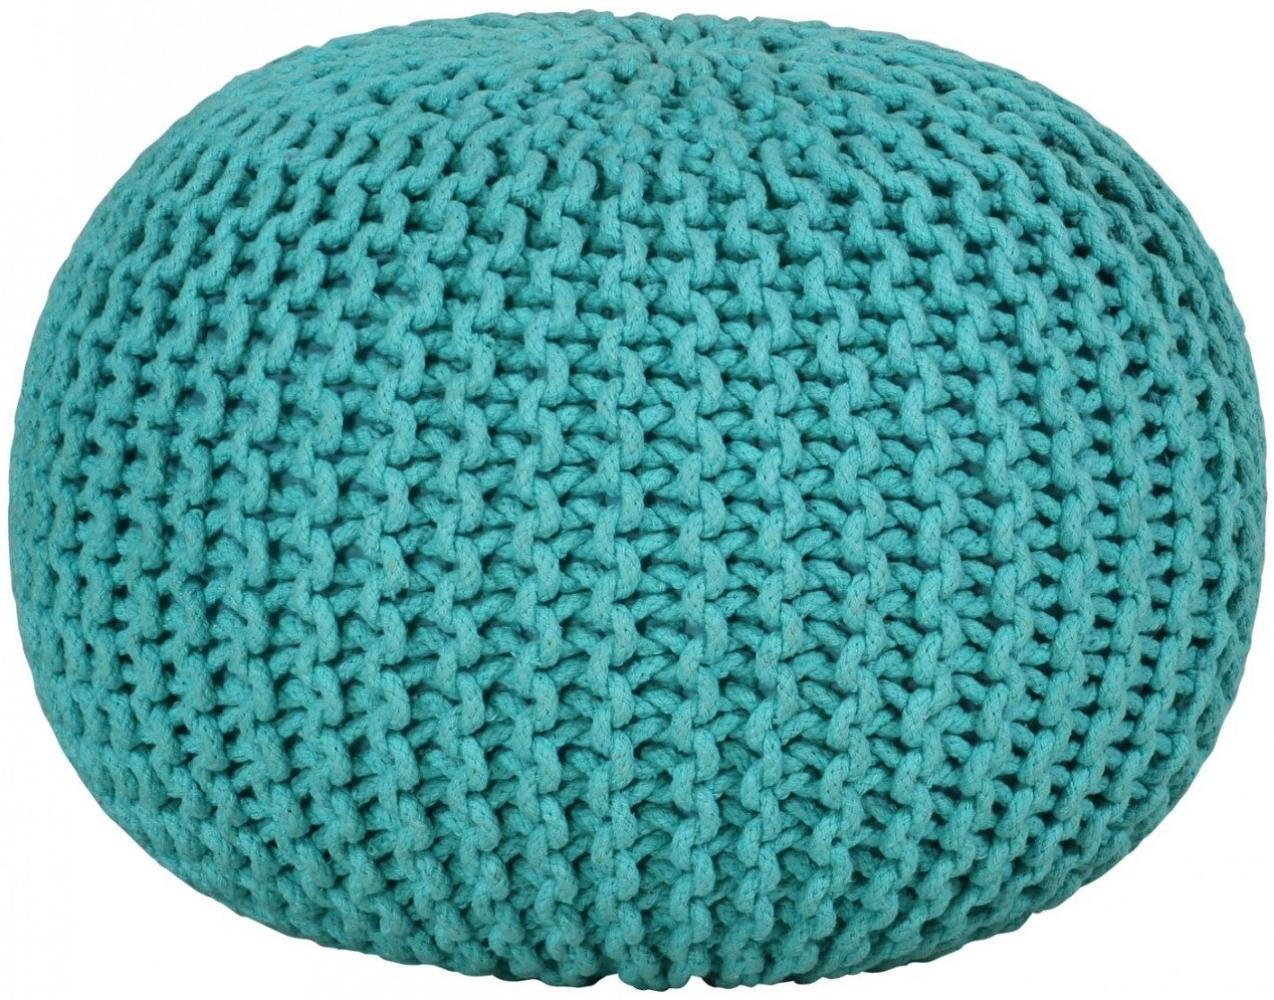 Stylefurniture Cottonball, Stoff, türkis, 55 x 55 x 37 cm Bild 1